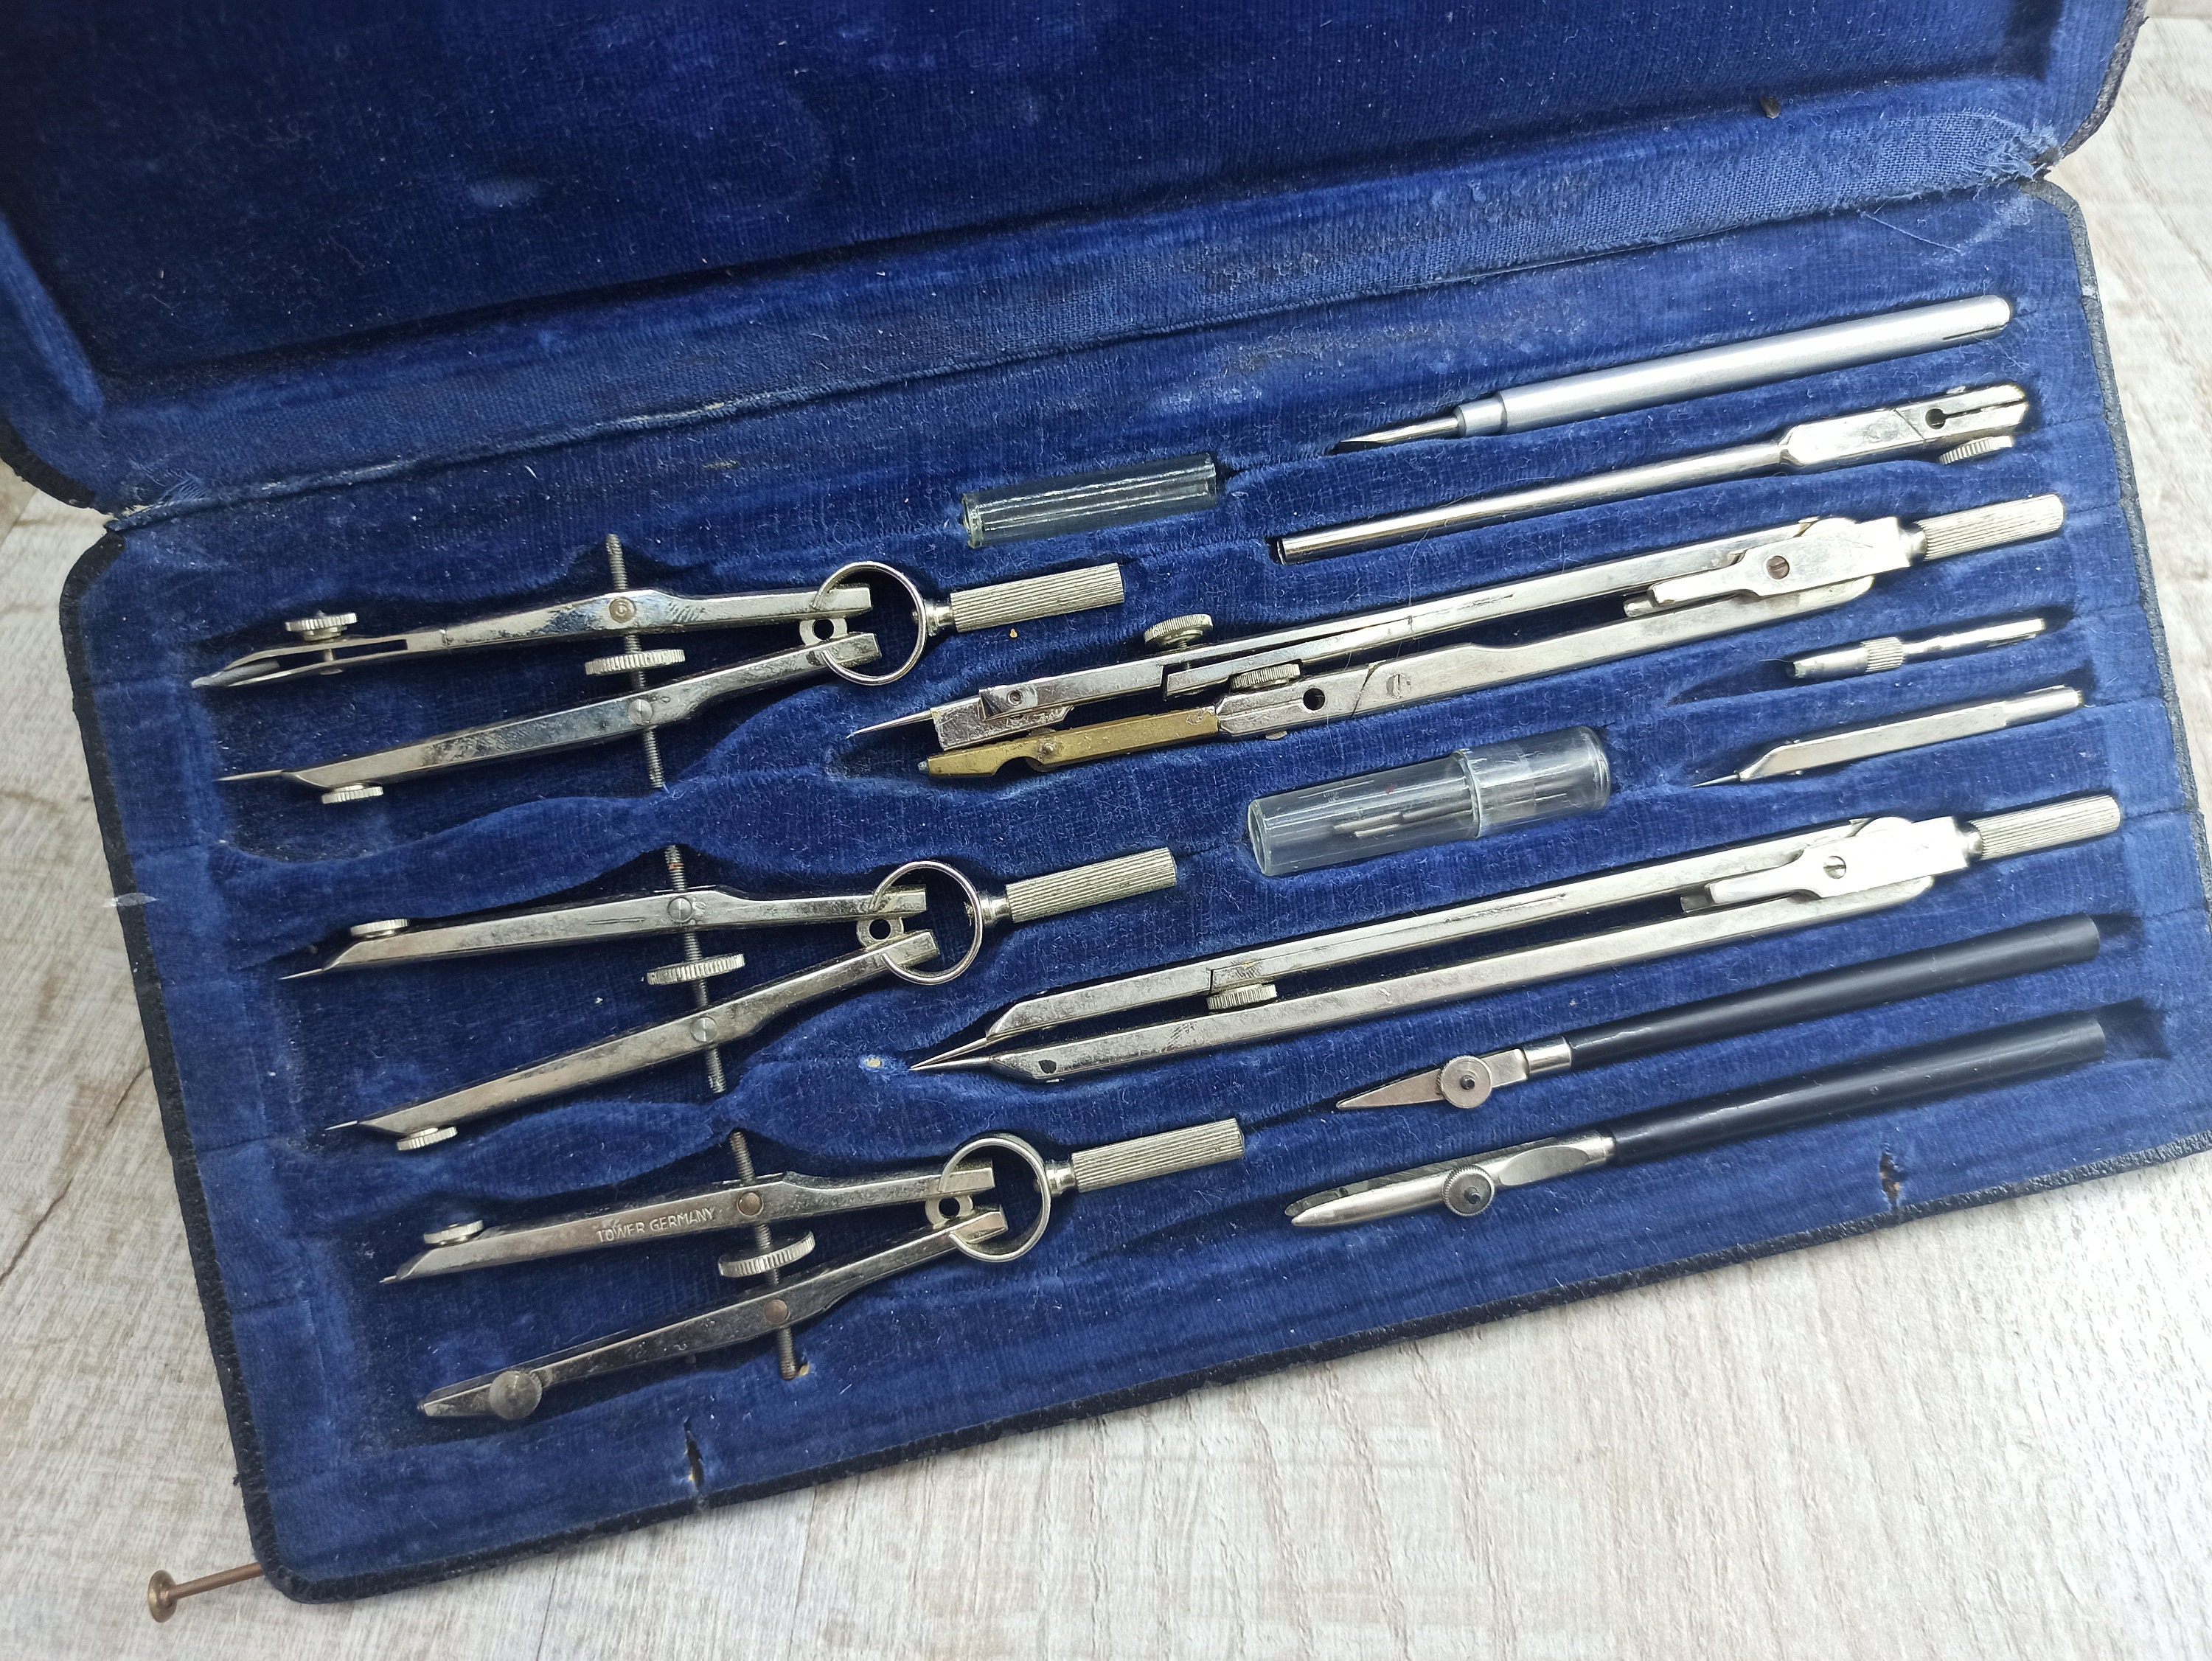 Vintage 1 pair of compasses engineer drafting drawing tool antique w wood  pencil